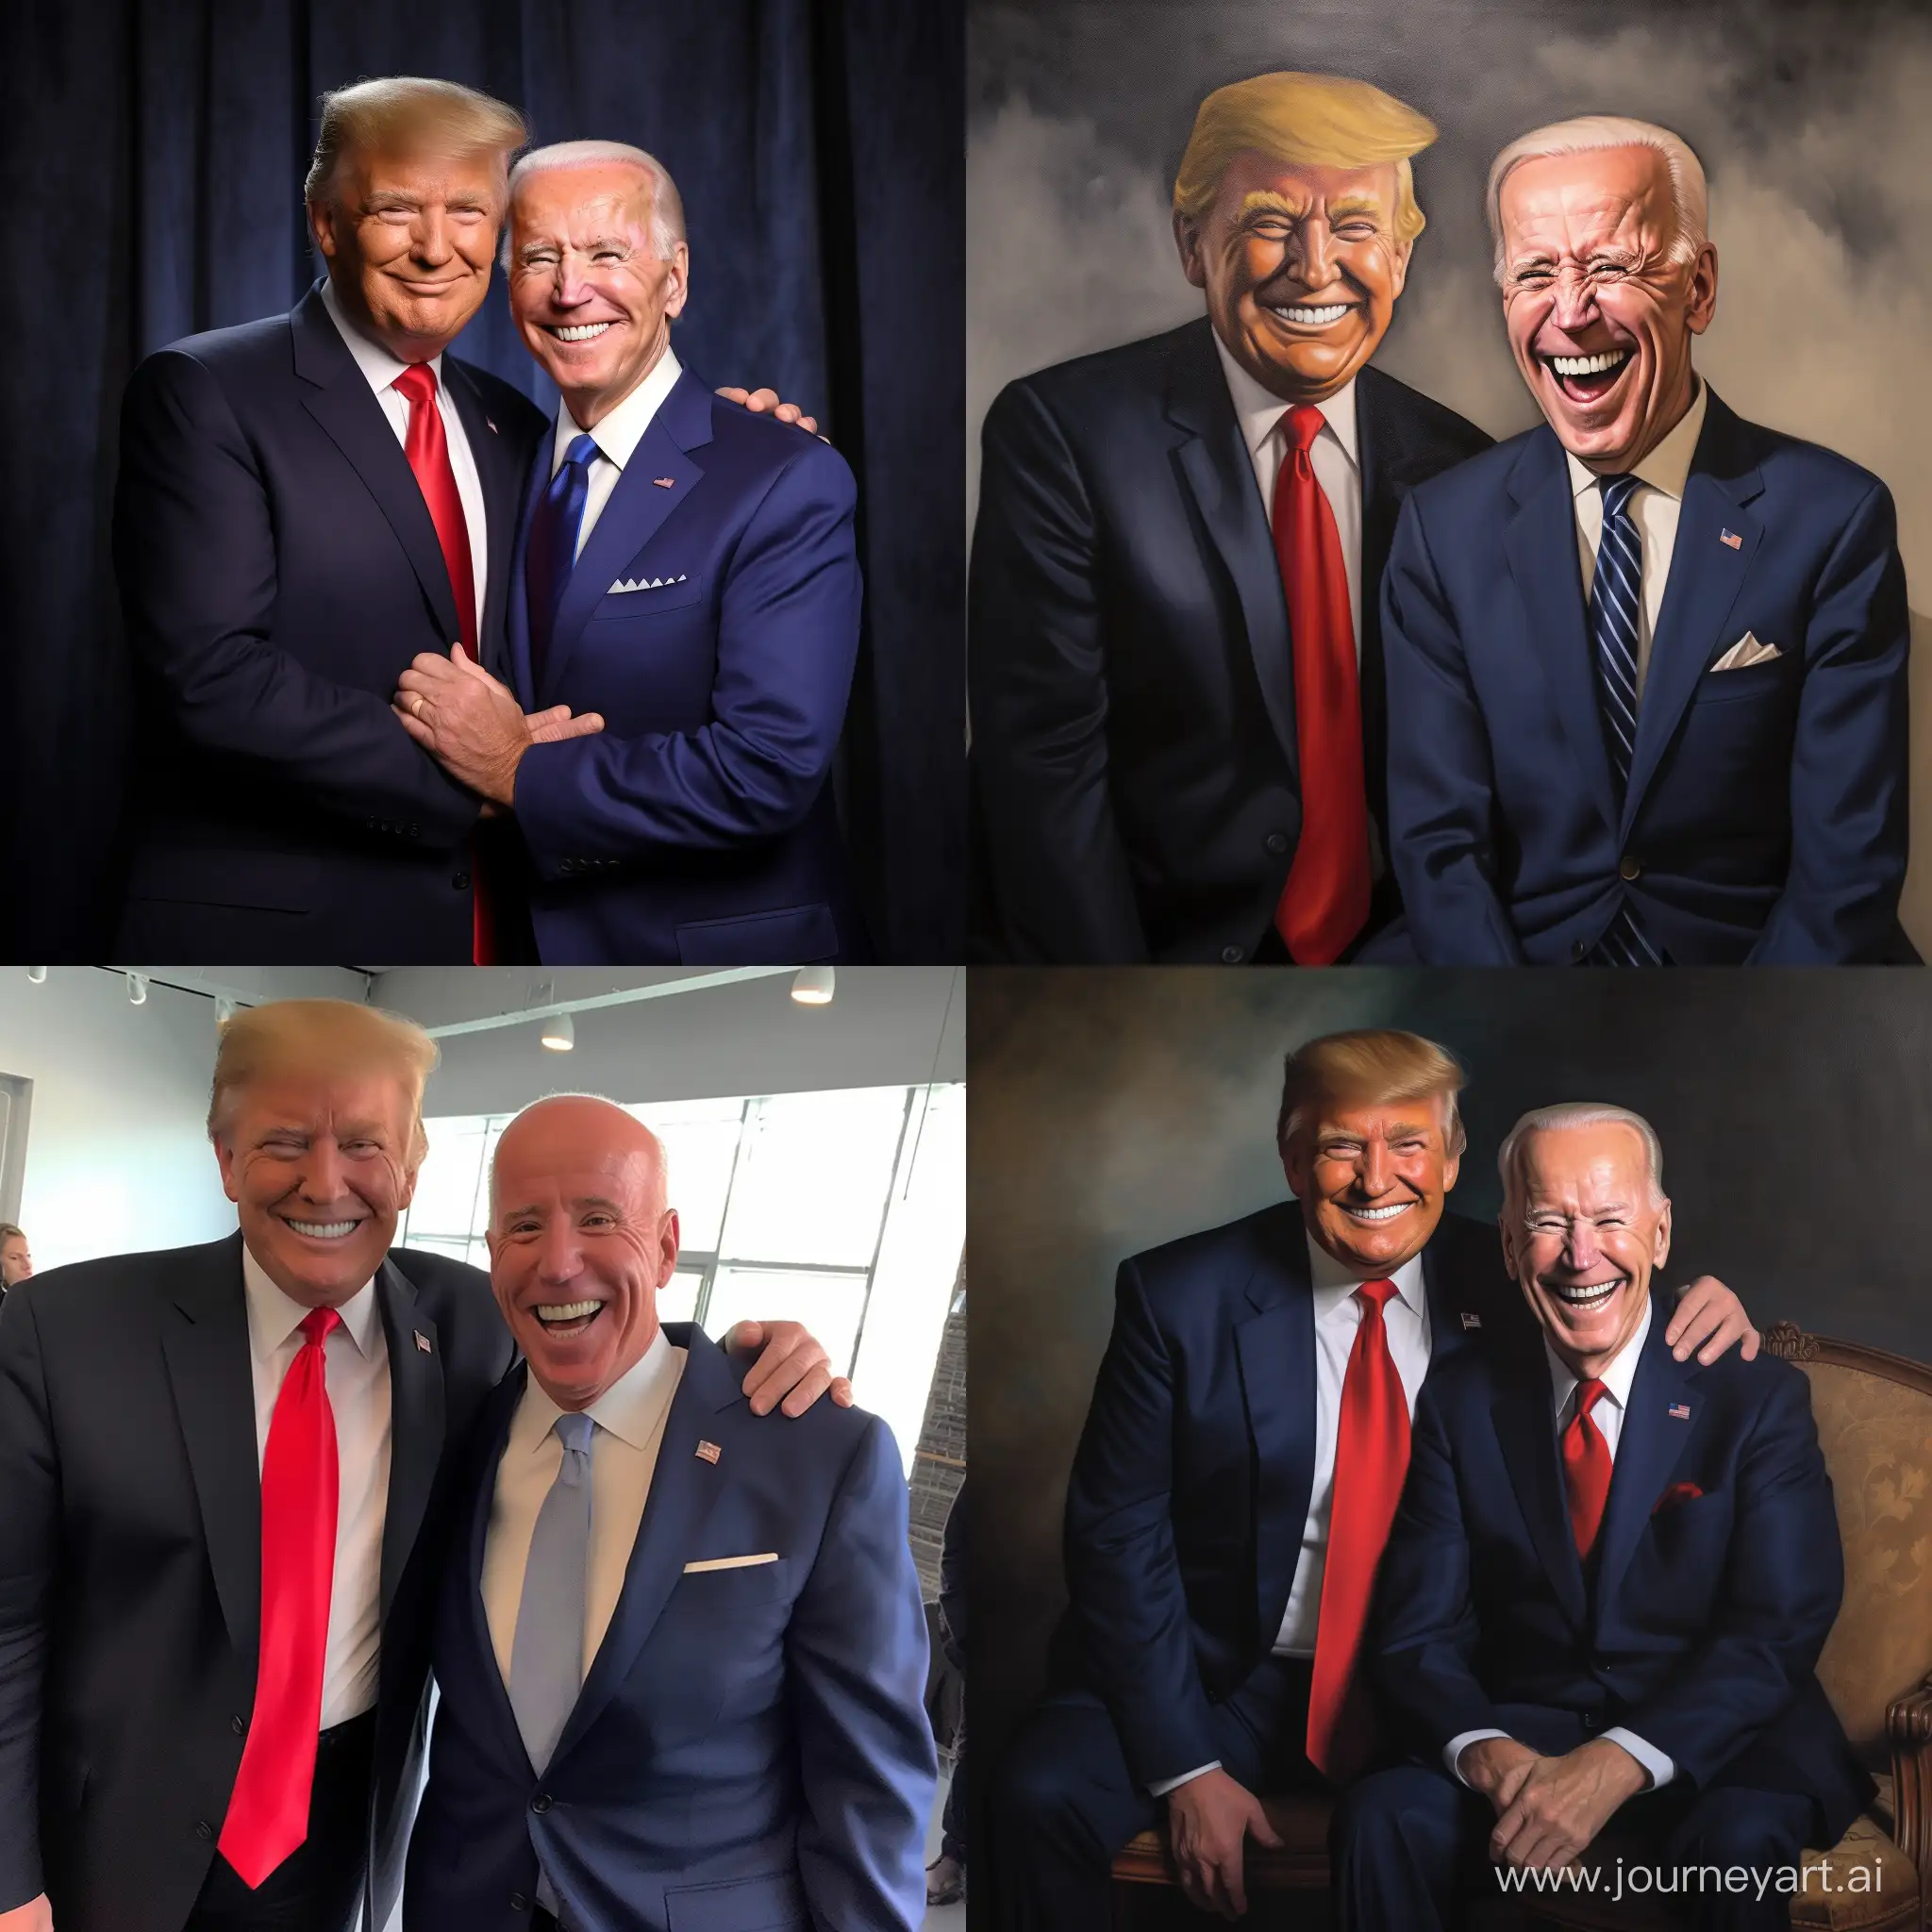 Donald-Trump-and-Joe-Biden-Sharing-a-Friendly-Moment